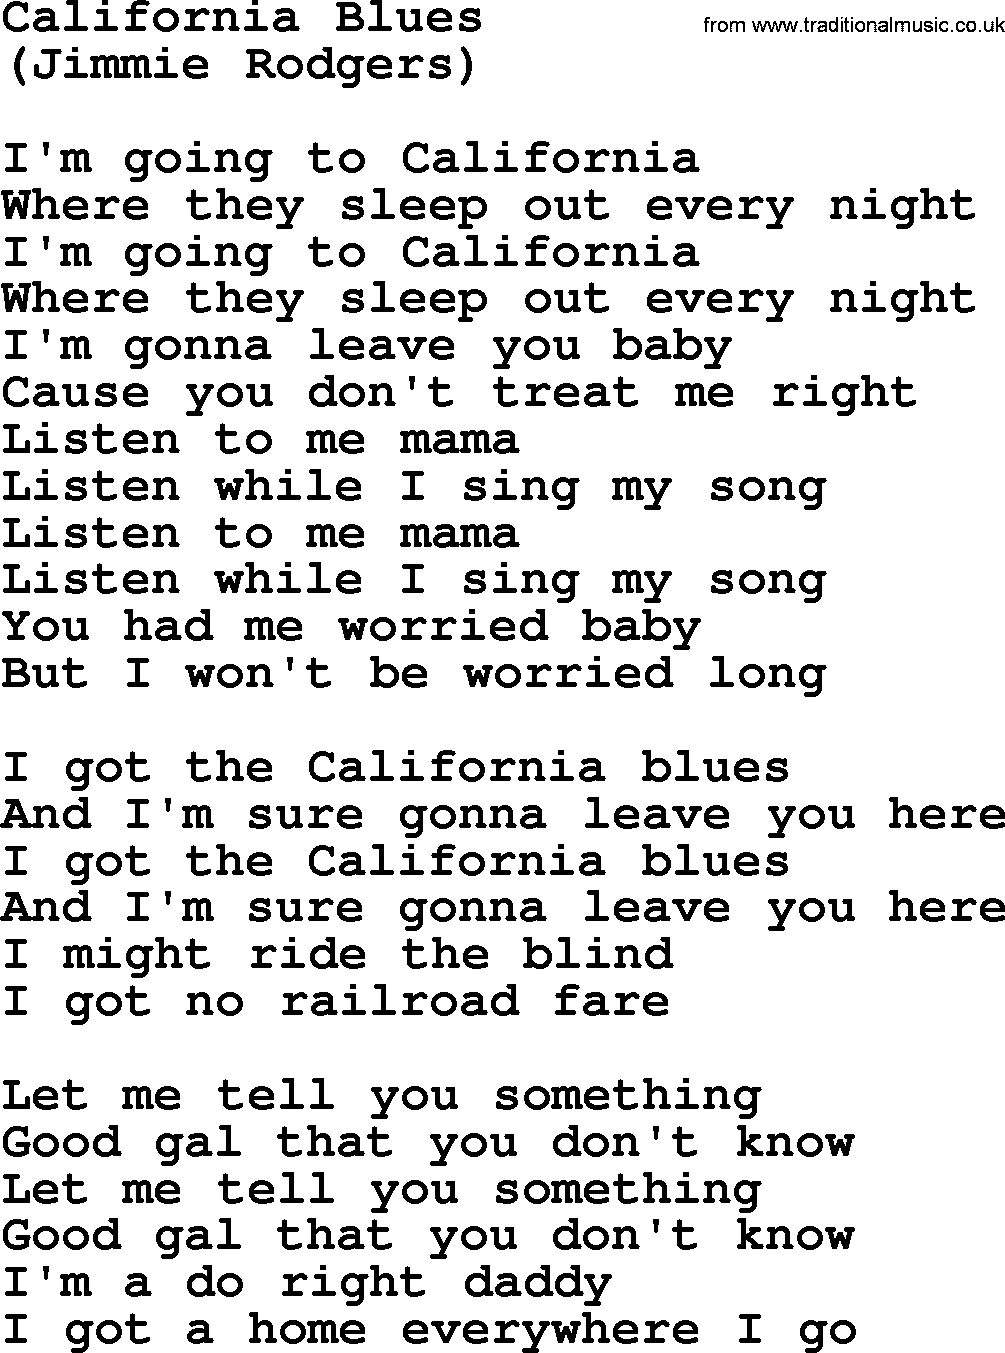 The Byrds song California Blues, lyrics